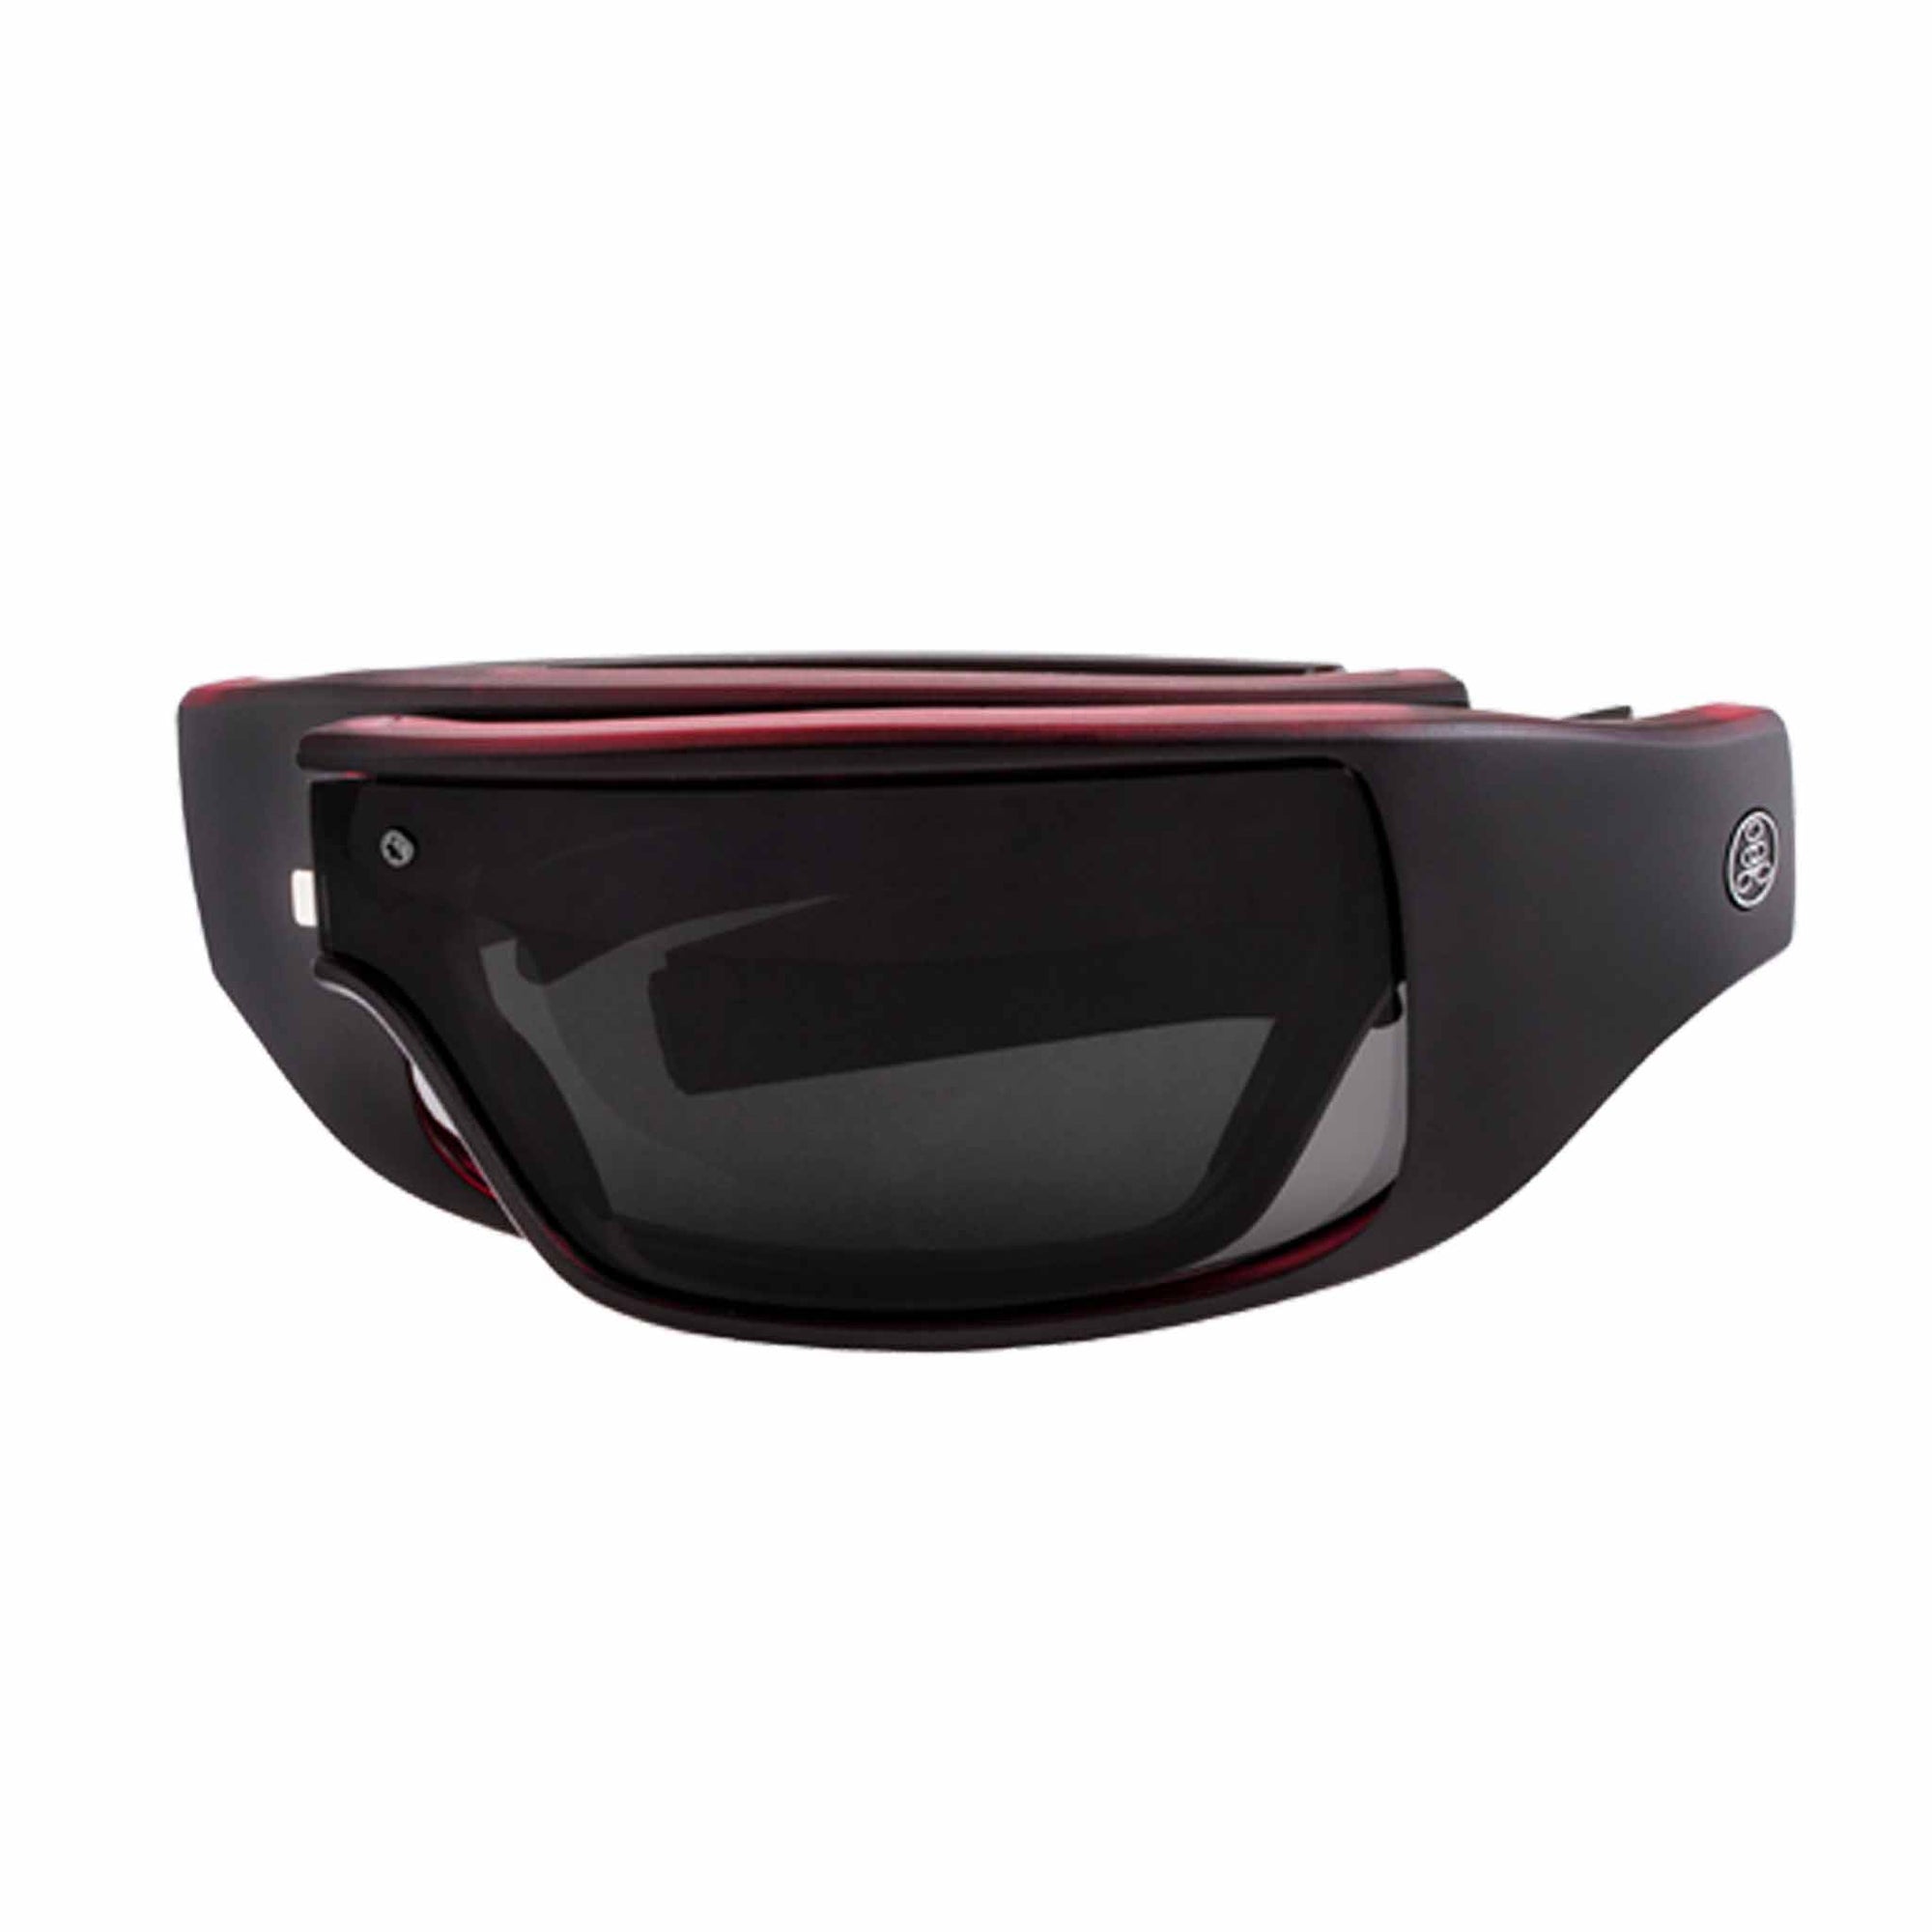 Popticals, Premium Compact Sunglasses, PopGear, 030050-REGP, Polarized Sunglasses, Matte Red/Black Crystal Frame, Gray Lenses, Compact View